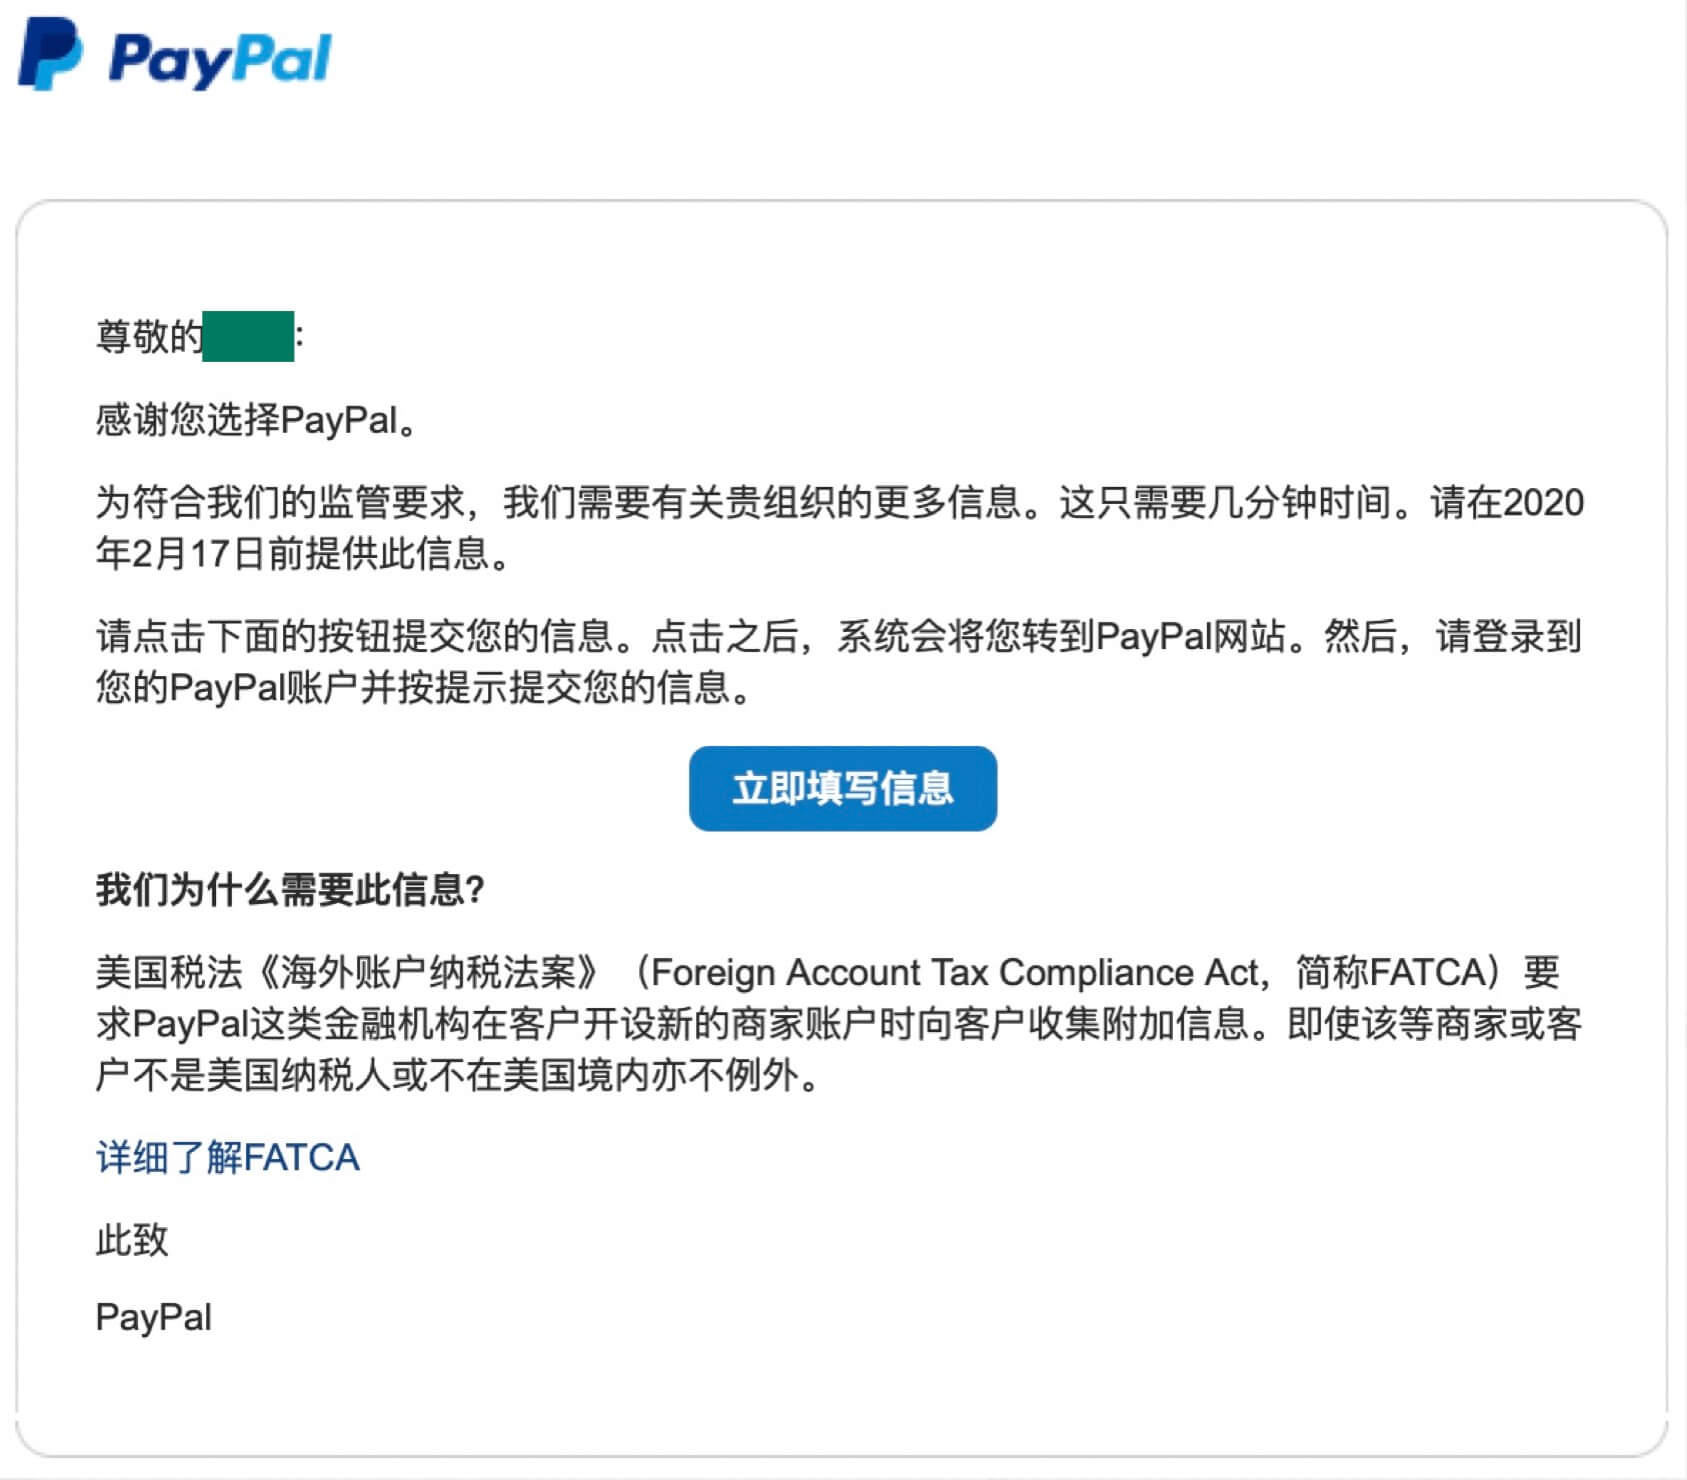 Paypal企业账户注册流程